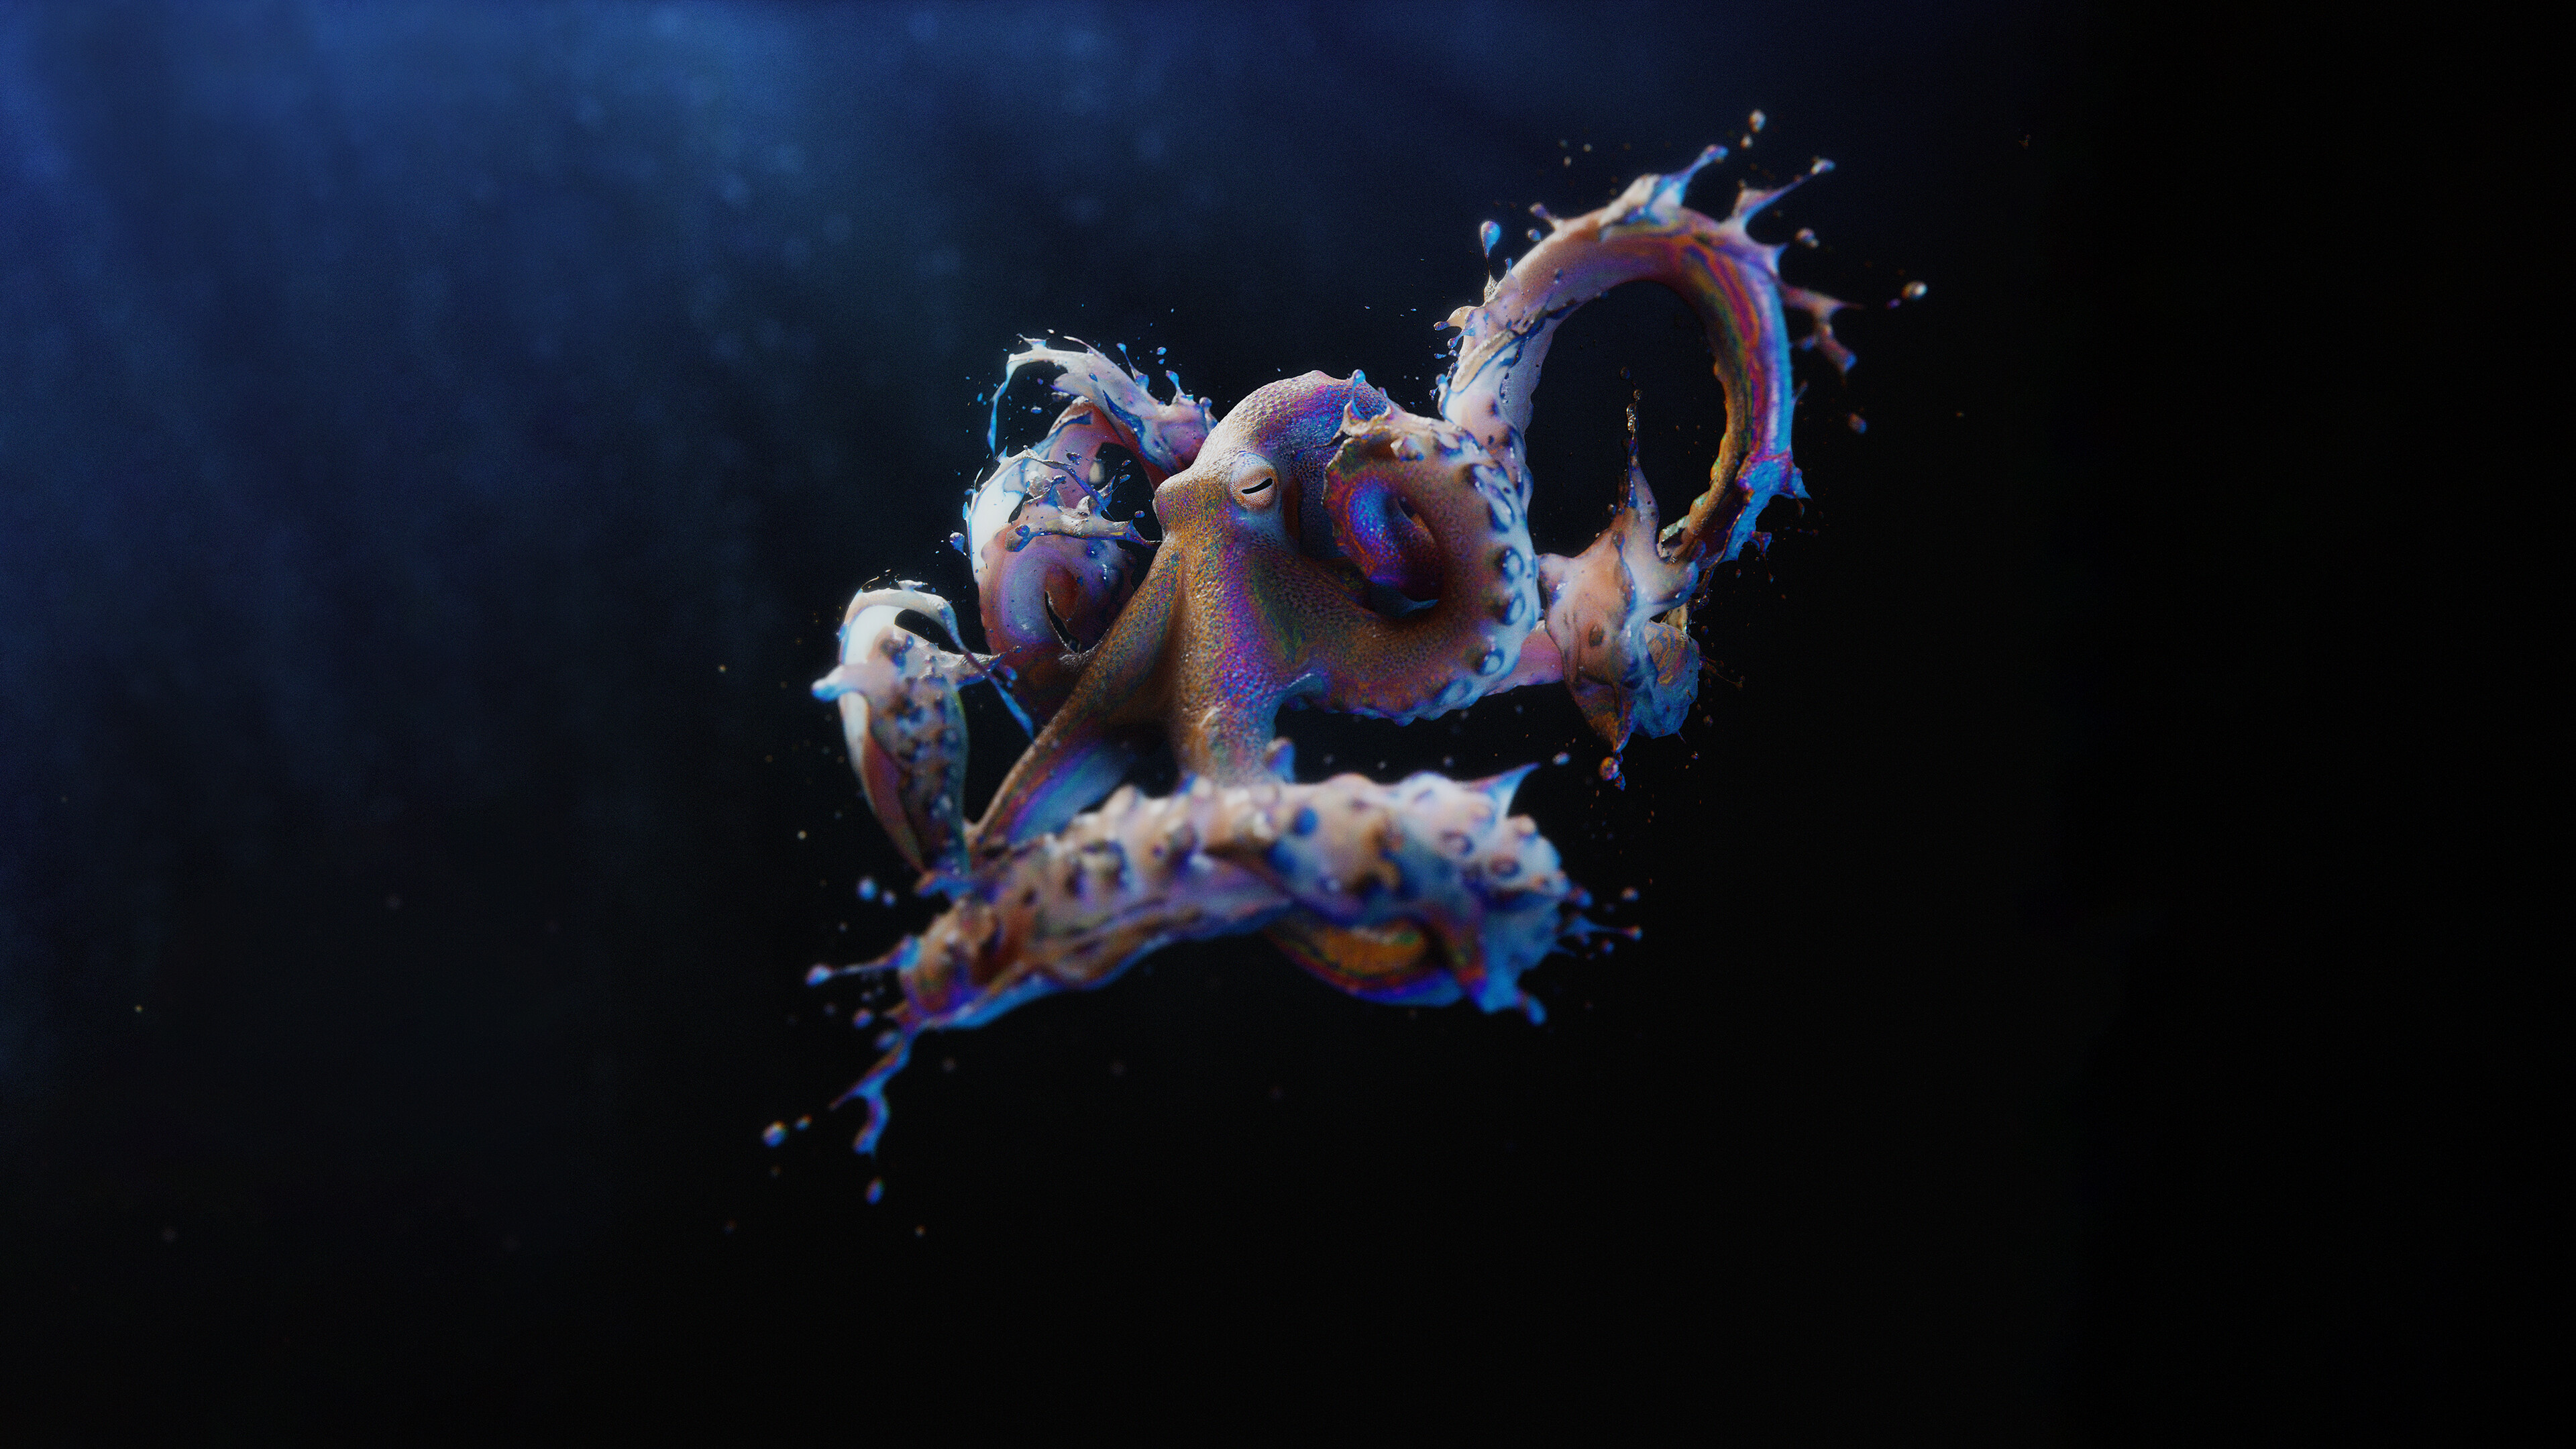 Splashing octopus, Blender artists' masterpiece, Artistic project, Community collaboration, 3840x2160 4K Desktop